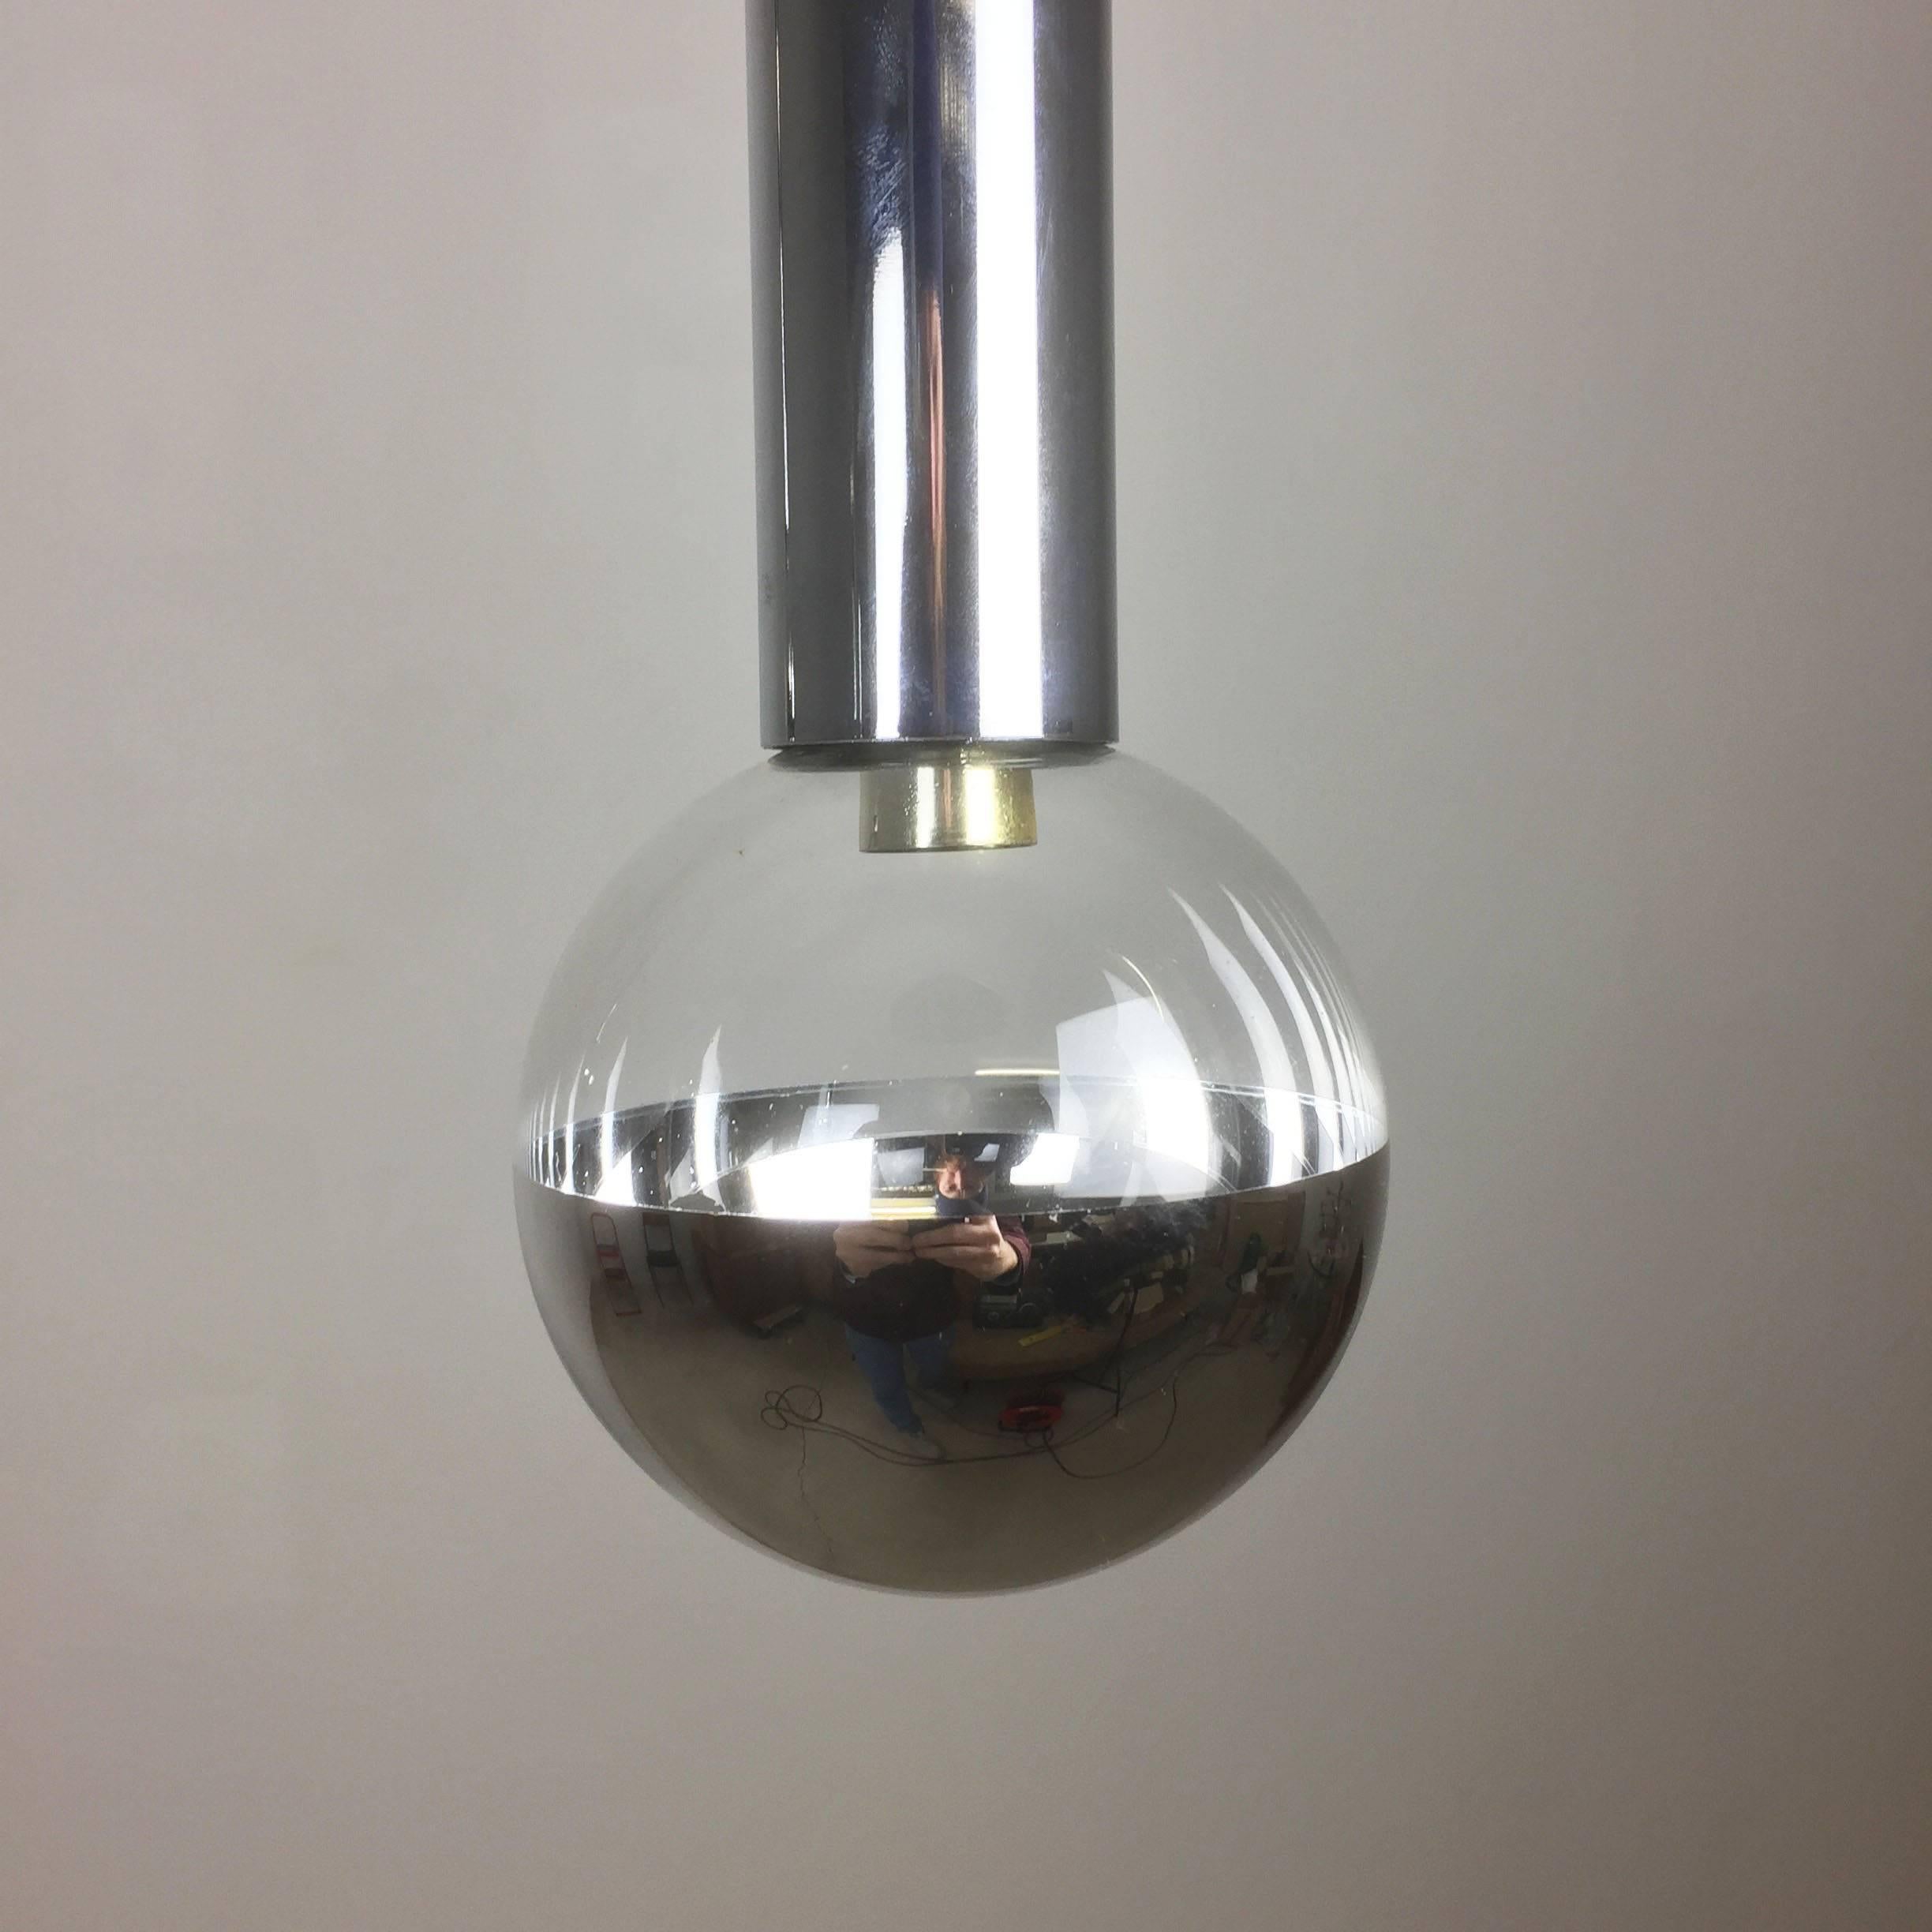 1970s Chrome hanging Lights Glass Bulb by Motoko Ishi for Staff Lights, Germany For Sale 1